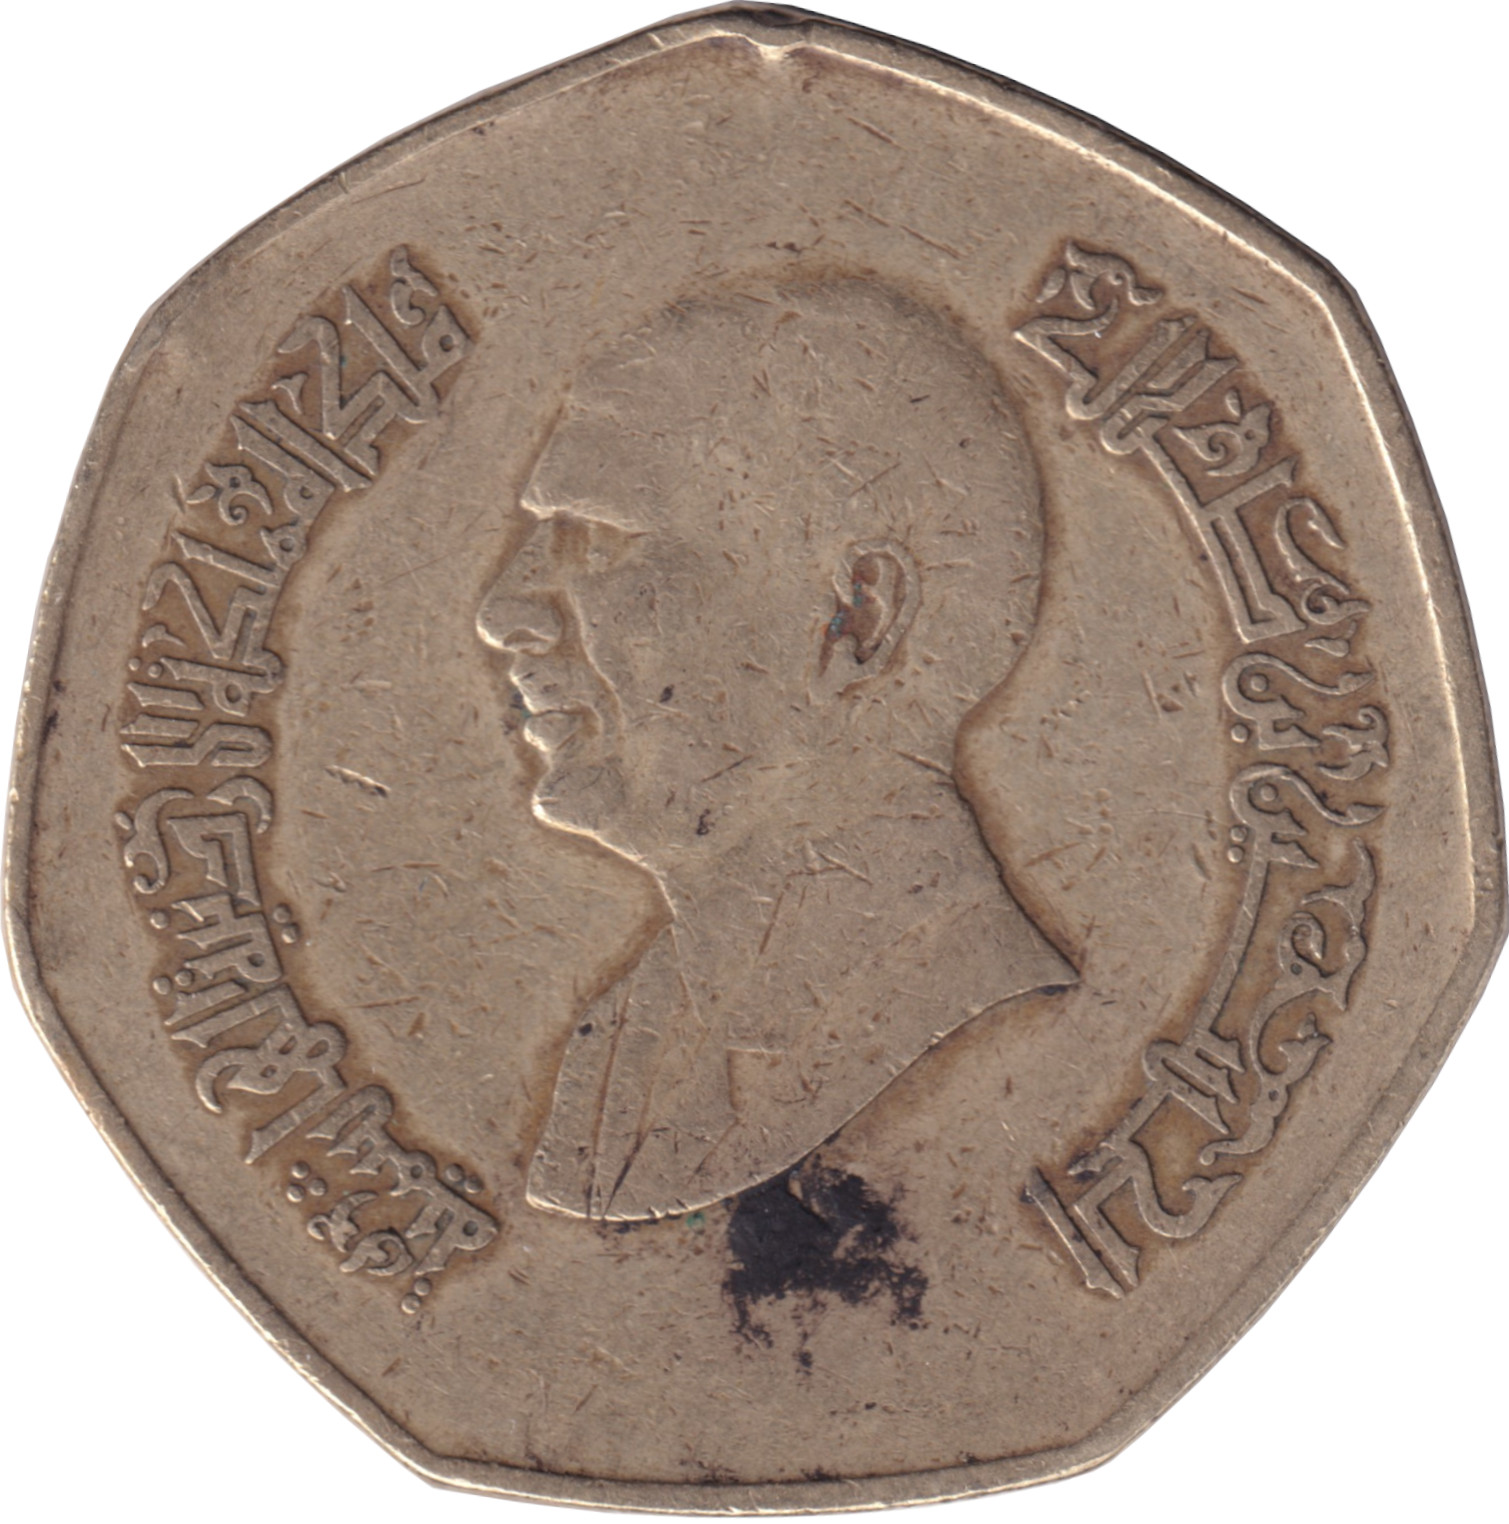 1 dinar - Hussein Ibn Talal - Tête agée - Polygonale